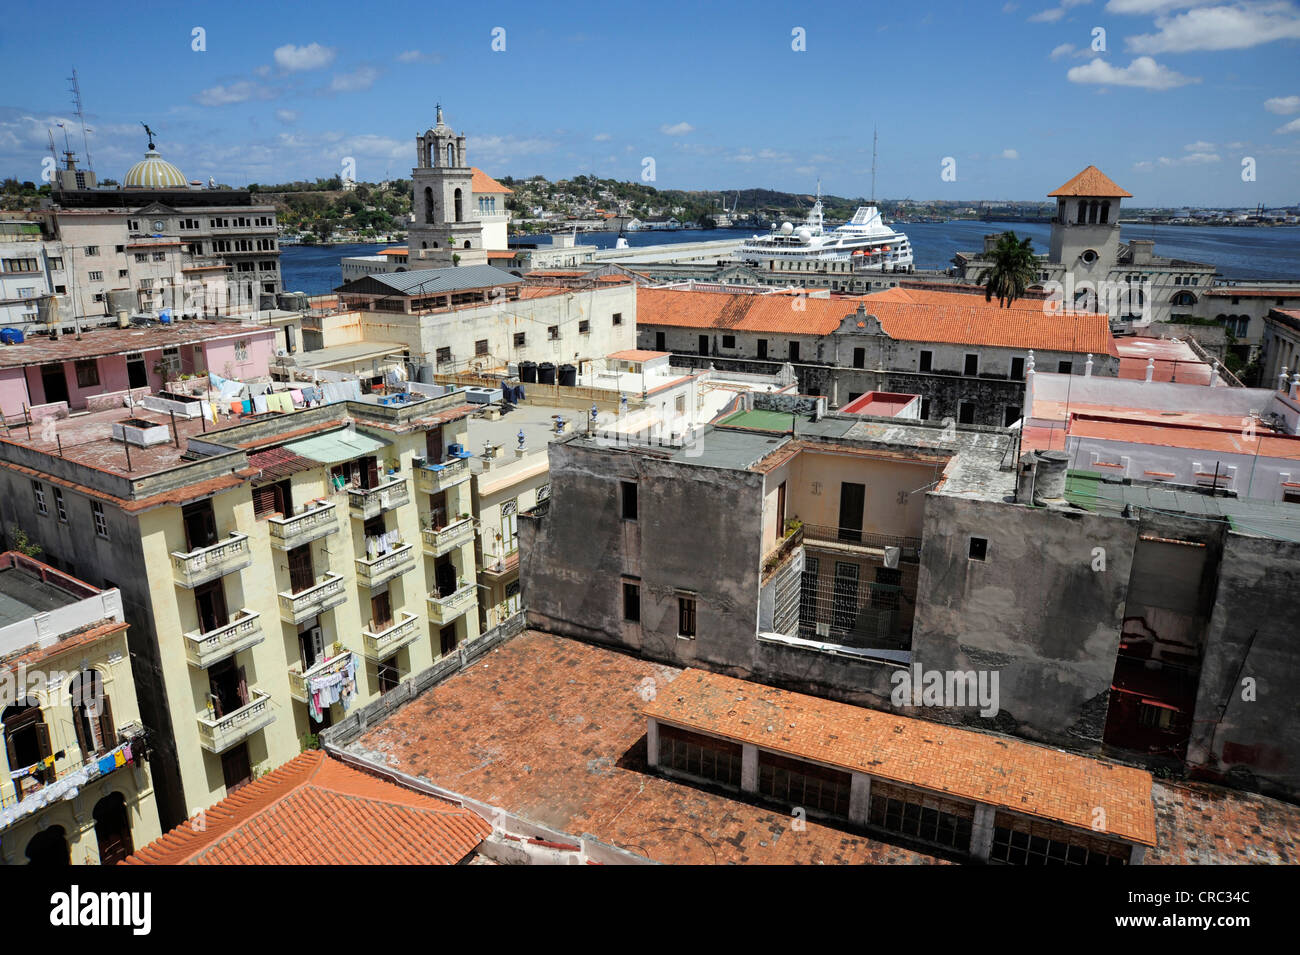 Hafen, Blick über die Dächer, die Altstadt von Havanna, Habana Vieja, Alt-Havanna, Kuba, große Antillen, Karibik Stockfoto